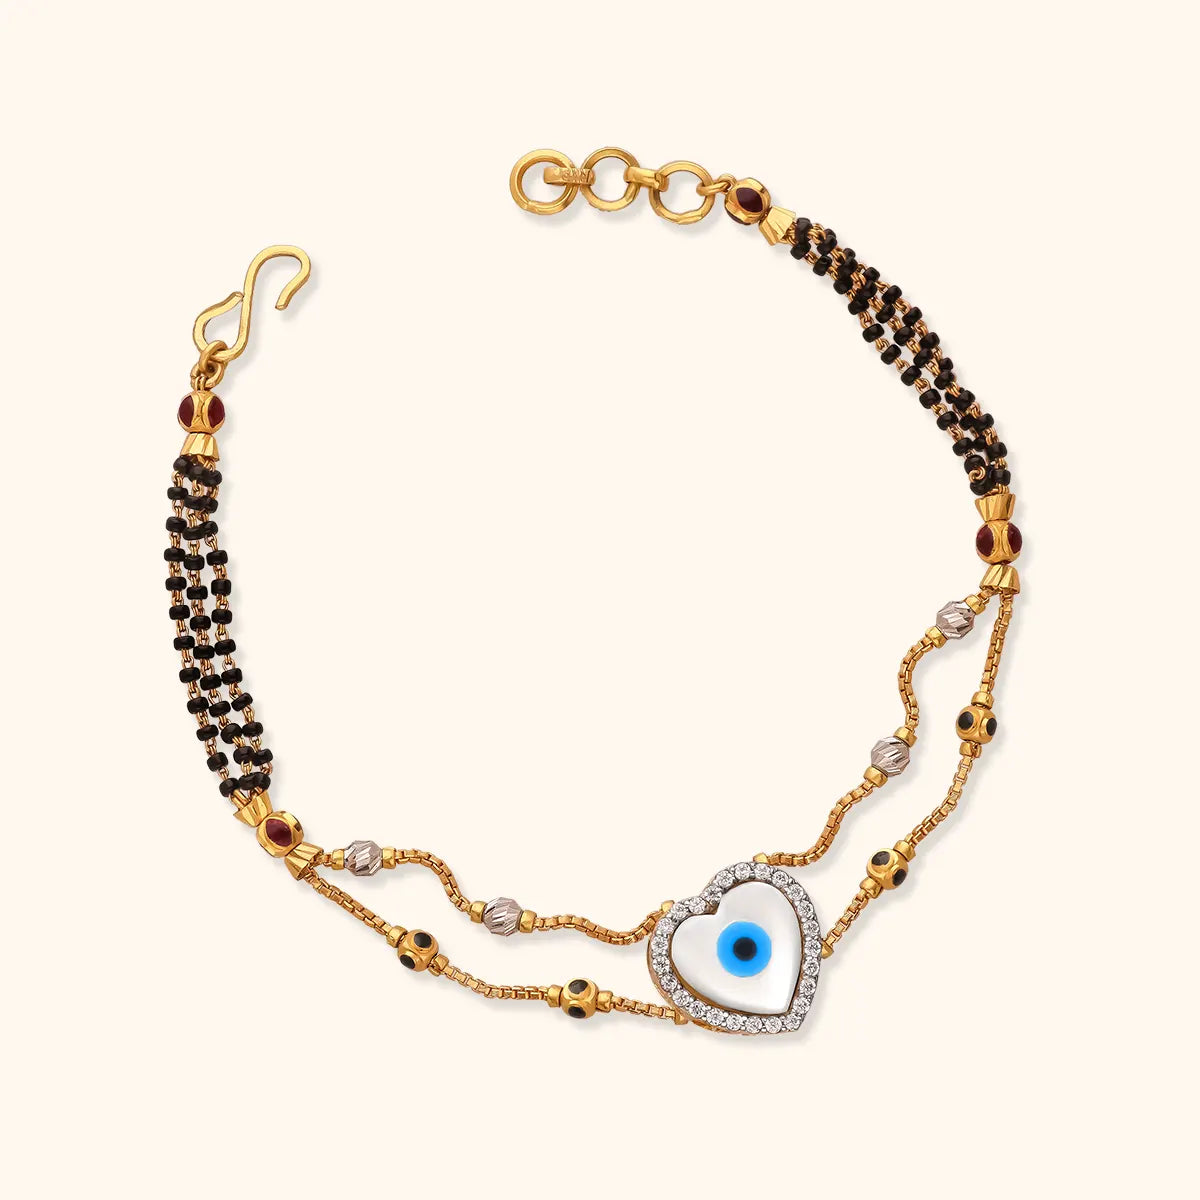 Buy Mehrunnisa Contemporary Turkish Evil Eye Mangalsutra Bracelet for Women  (JWL1553) at Amazon.in